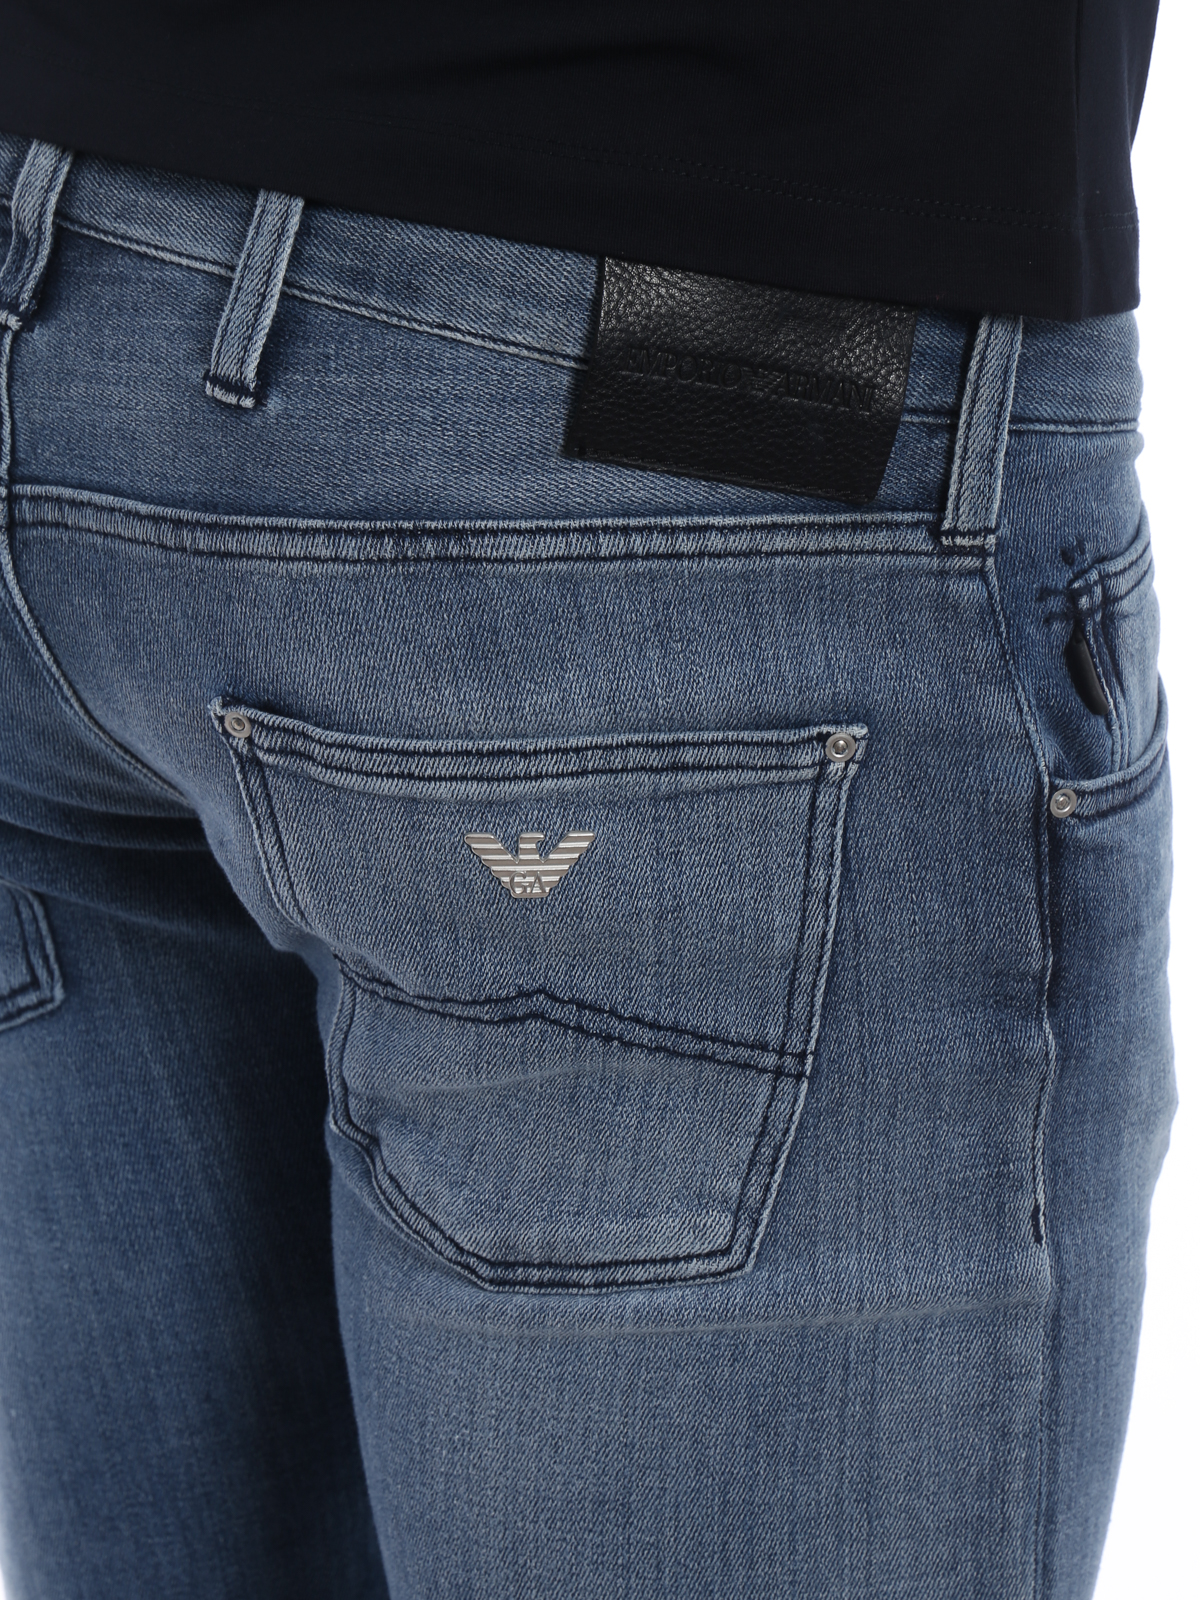 Skinny jeans Emporio Armani - J 20 extra slim stone washed jeans ...